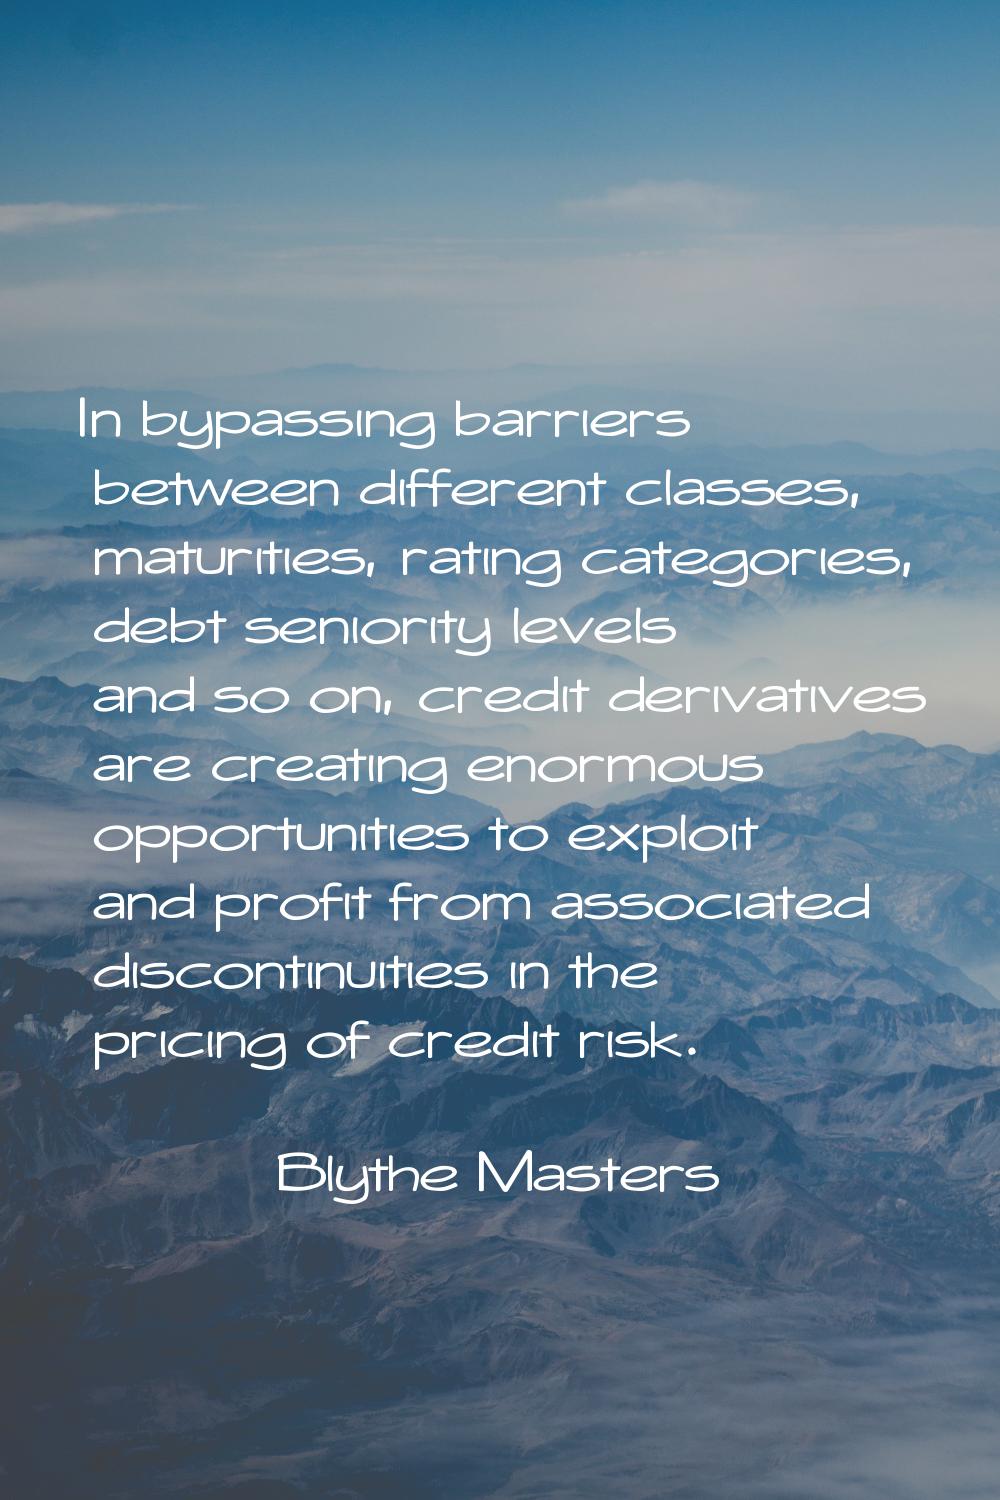 In bypassing barriers between different classes, maturities, rating categories, debt seniority leve